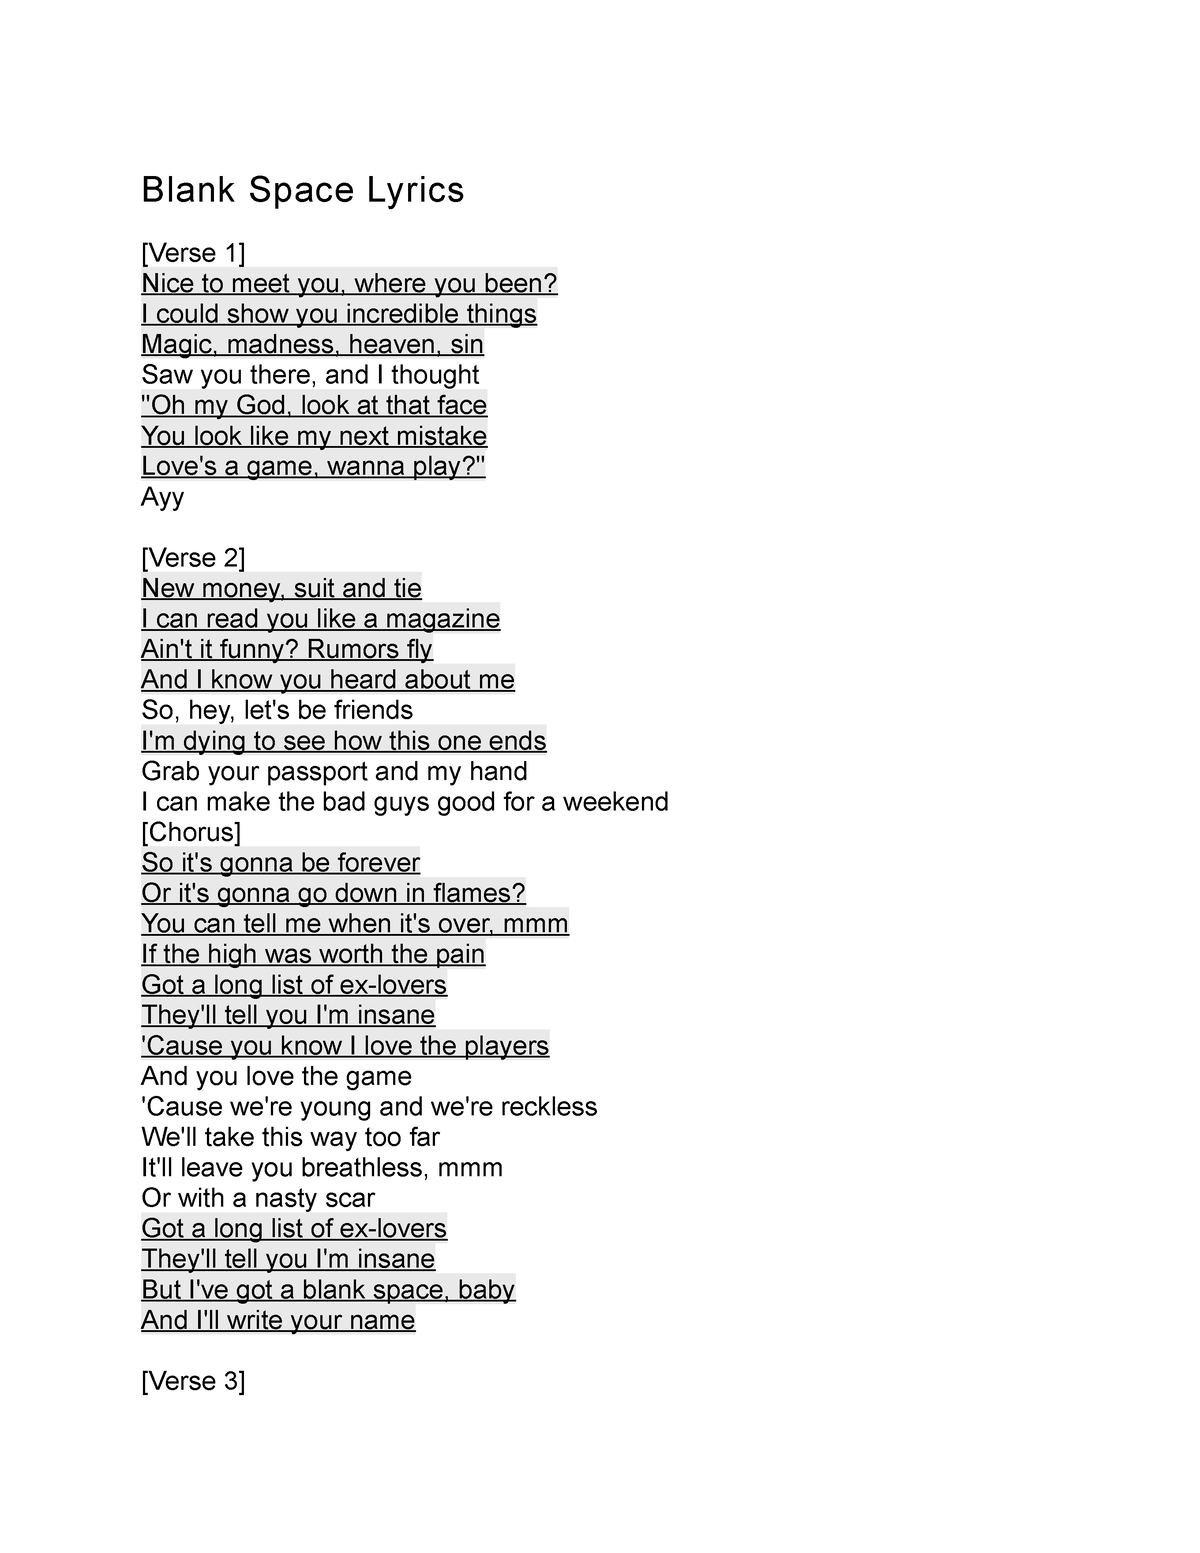 taylor swift song lyrics blank space